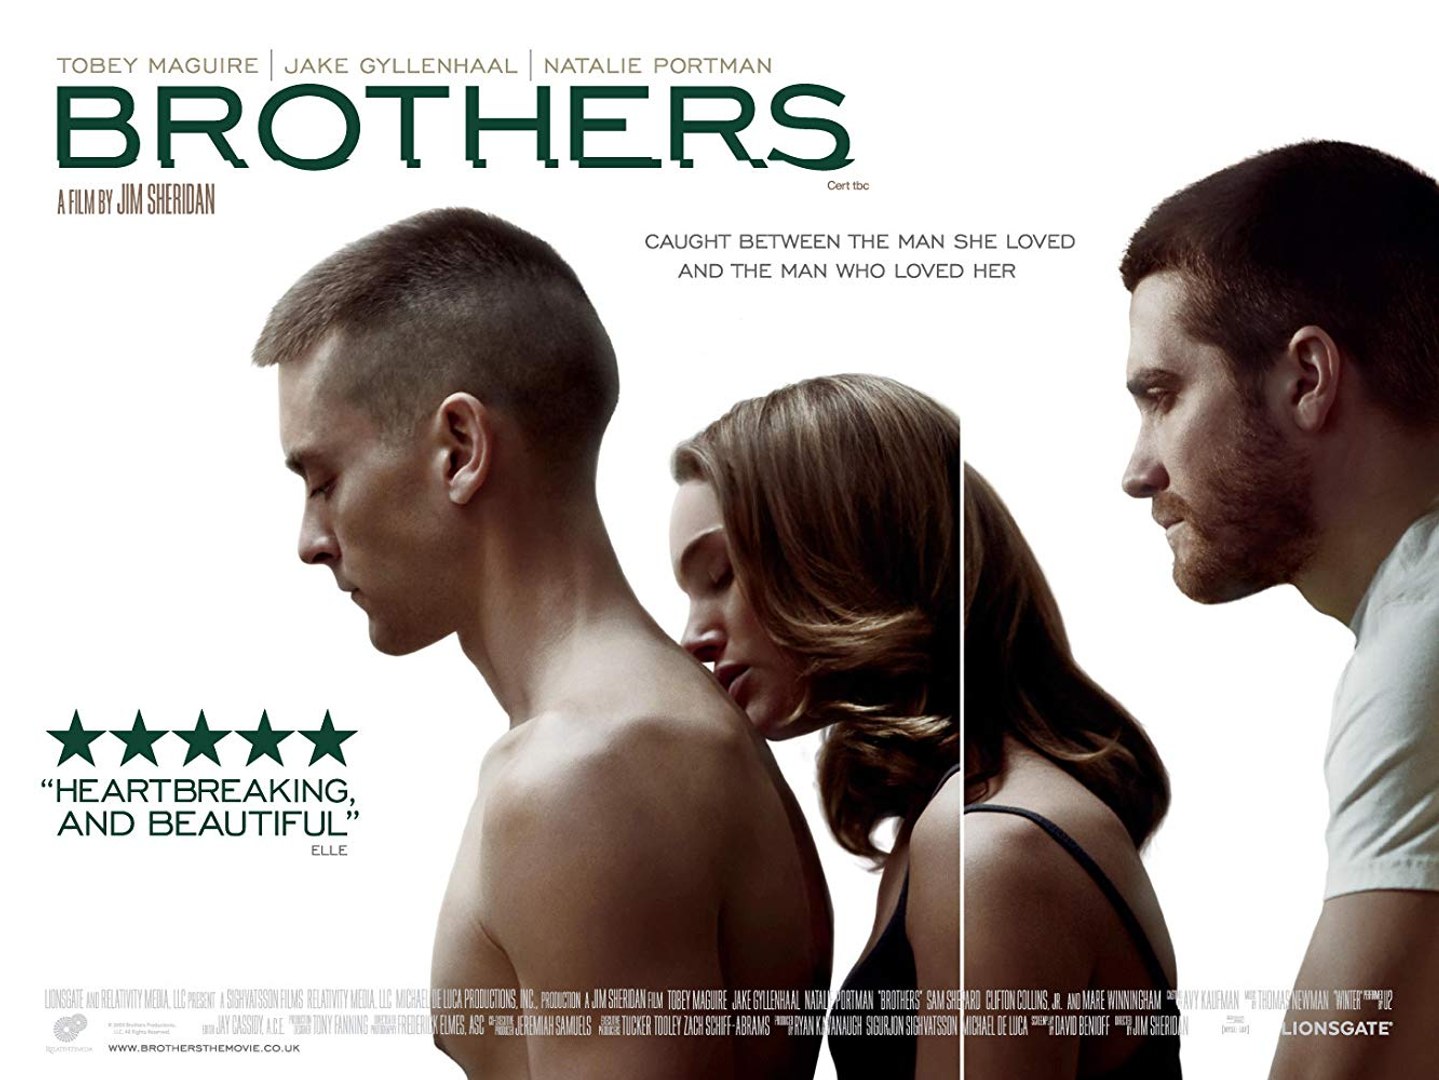 Brothers (2009) - Tobey Maguire, Jake Gyllenhaal, Portman - video Dailymotion